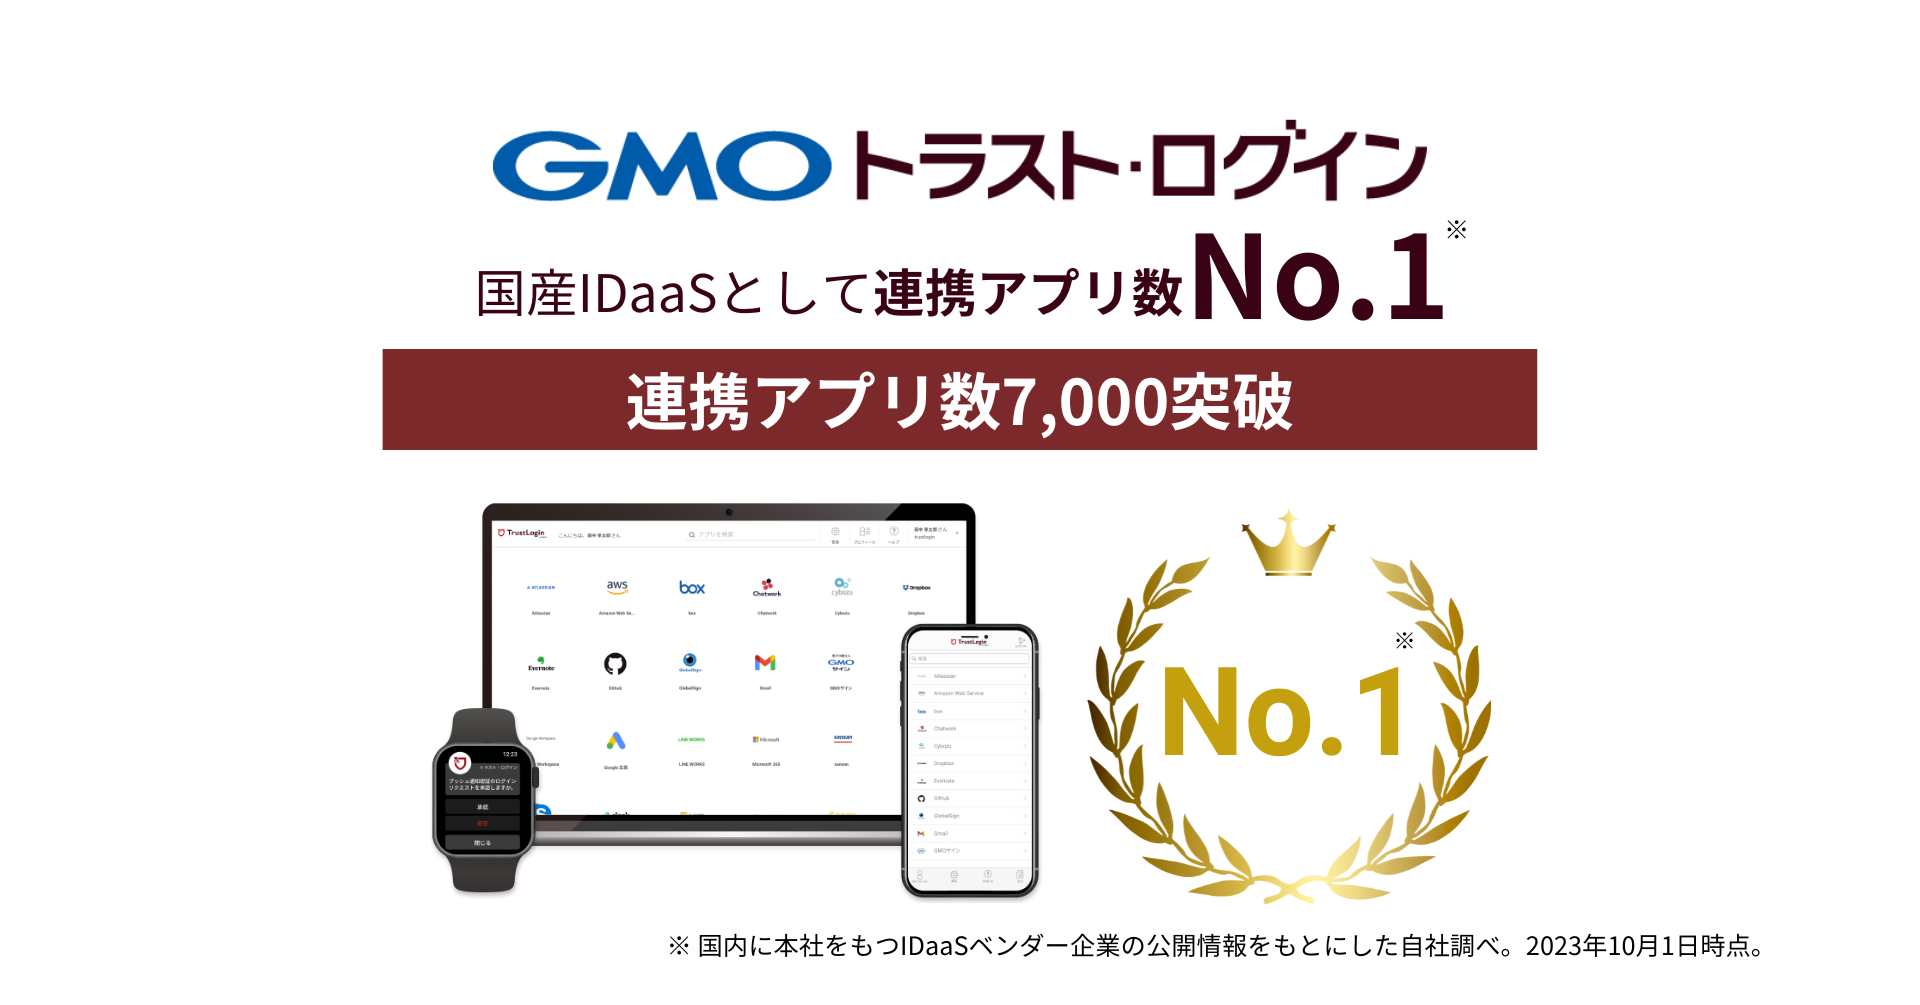 GMOトラスト・ログイン」、 国内IDaaSで連携アプリ数No.1に！ | GMO